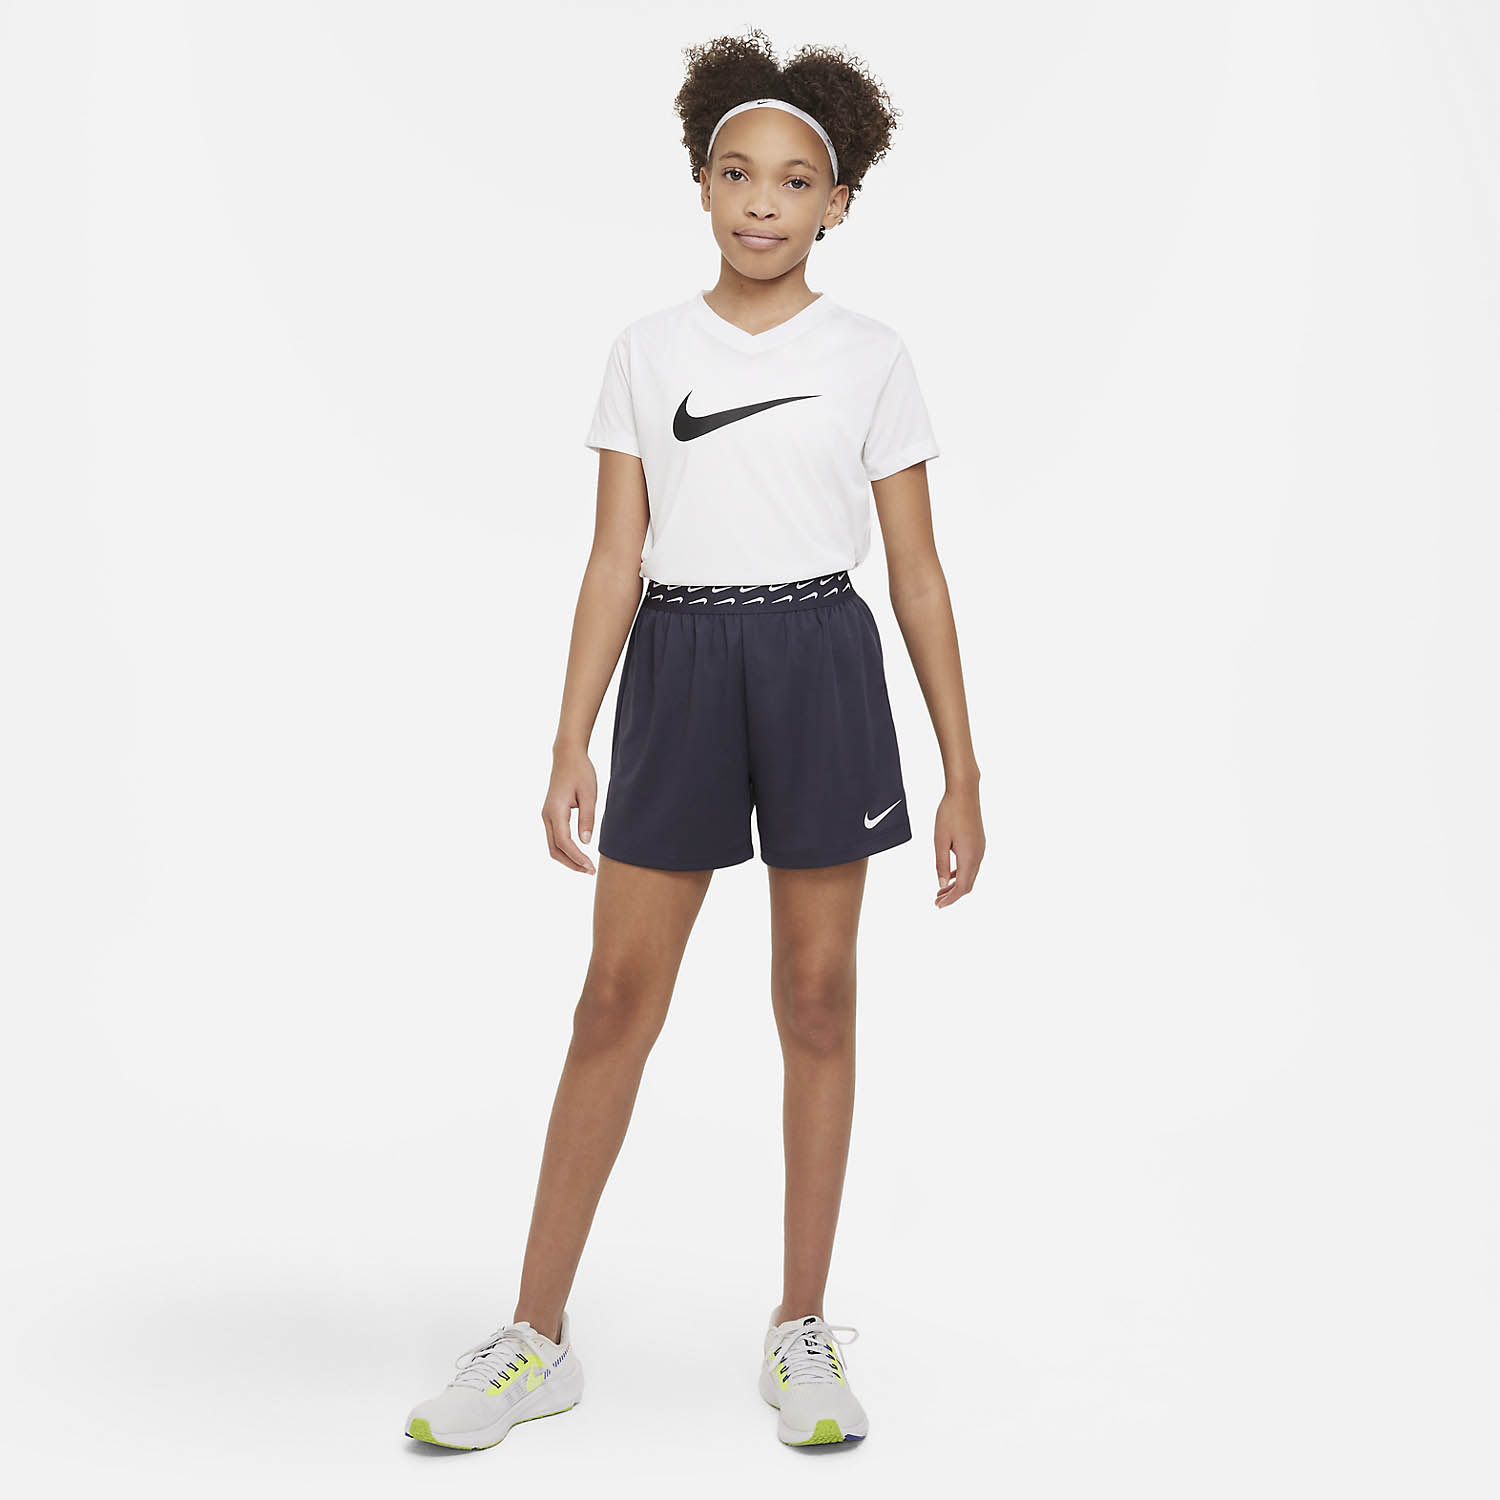 Nike Trophy 4in Shorts Girl - Gridiron/White